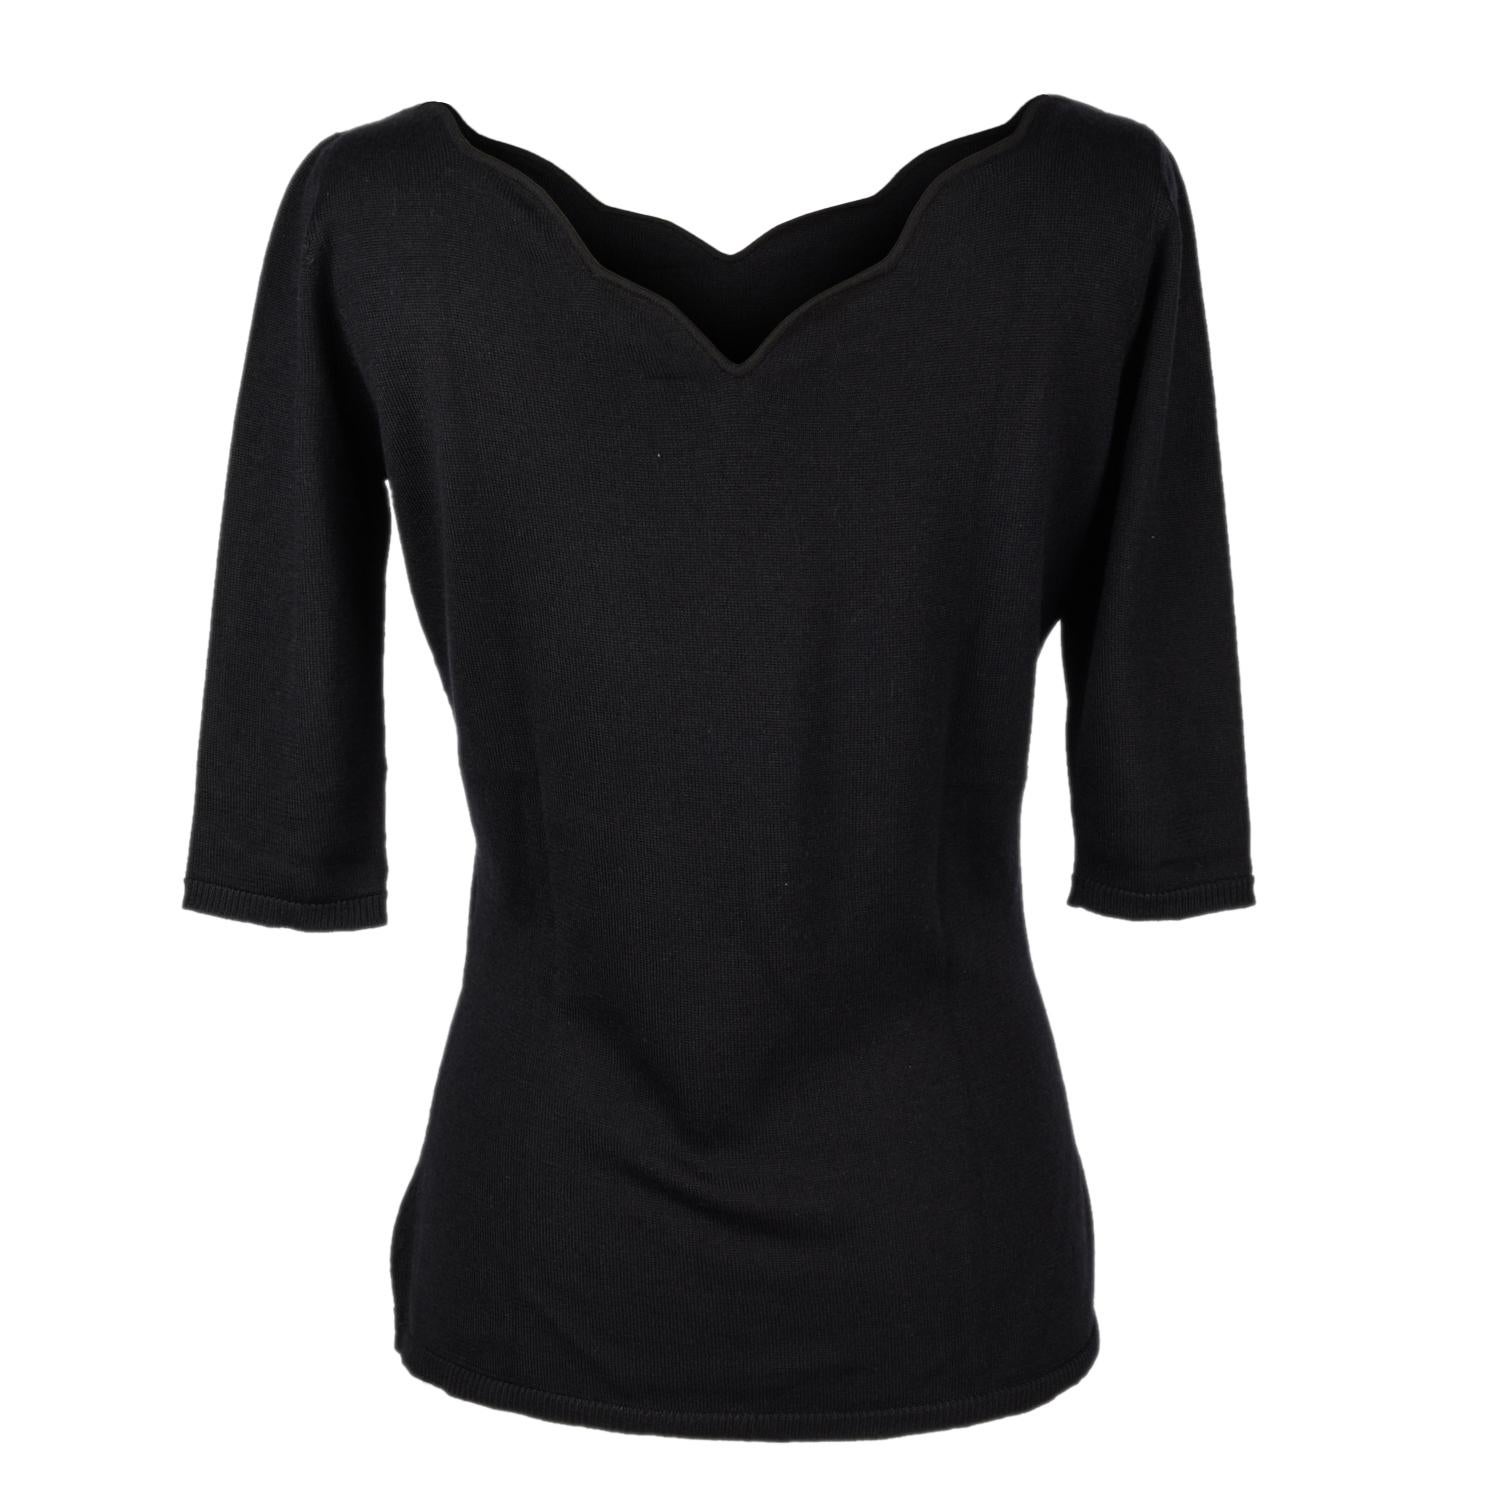 Christian Dior Top Black Cashmere Pullover Scallop Neckline 3/4 Sleeve 3